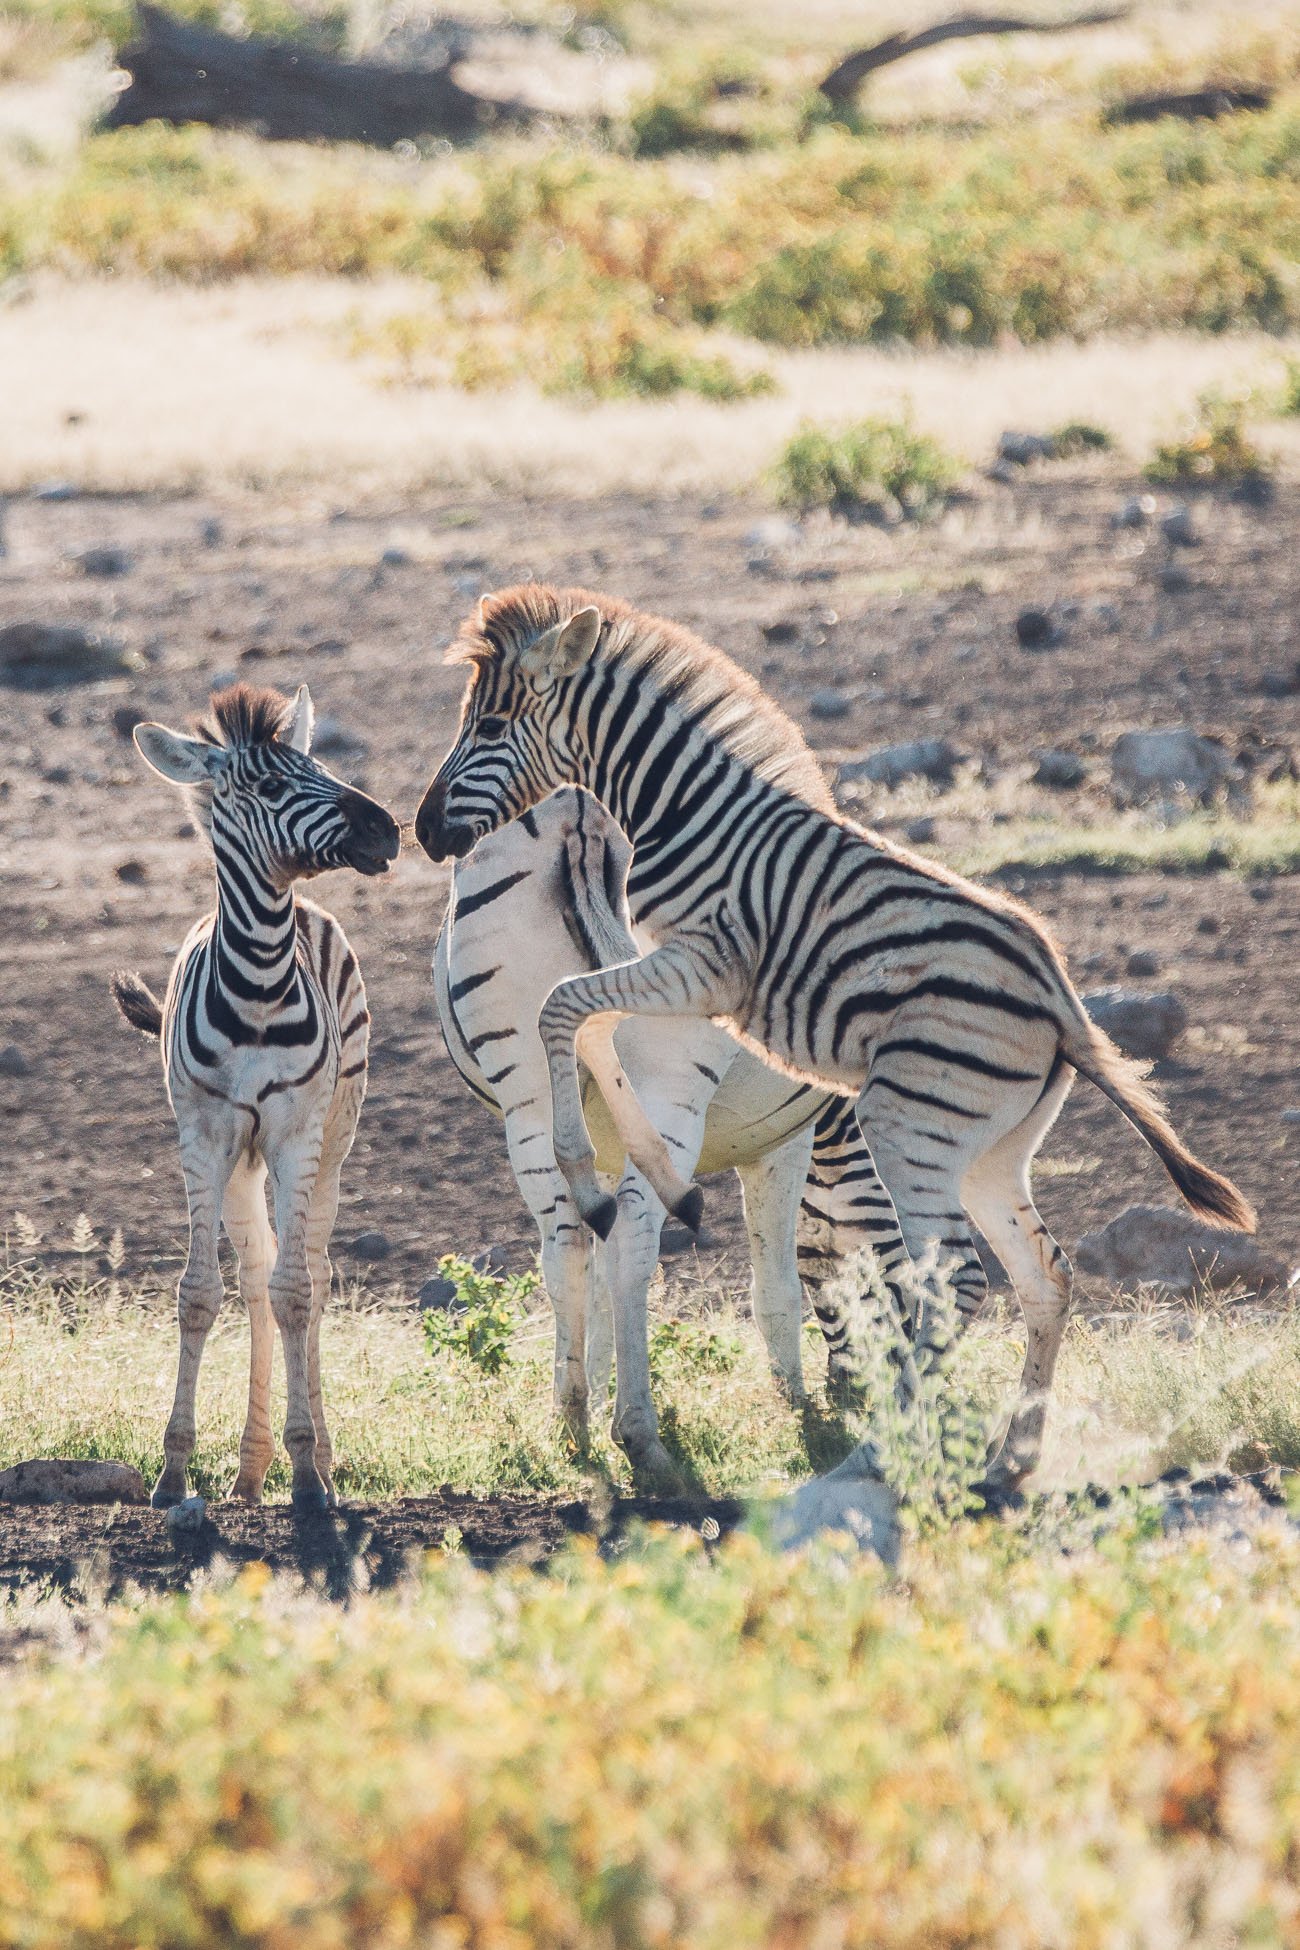 Baby Zebras playing at Etosha National Park